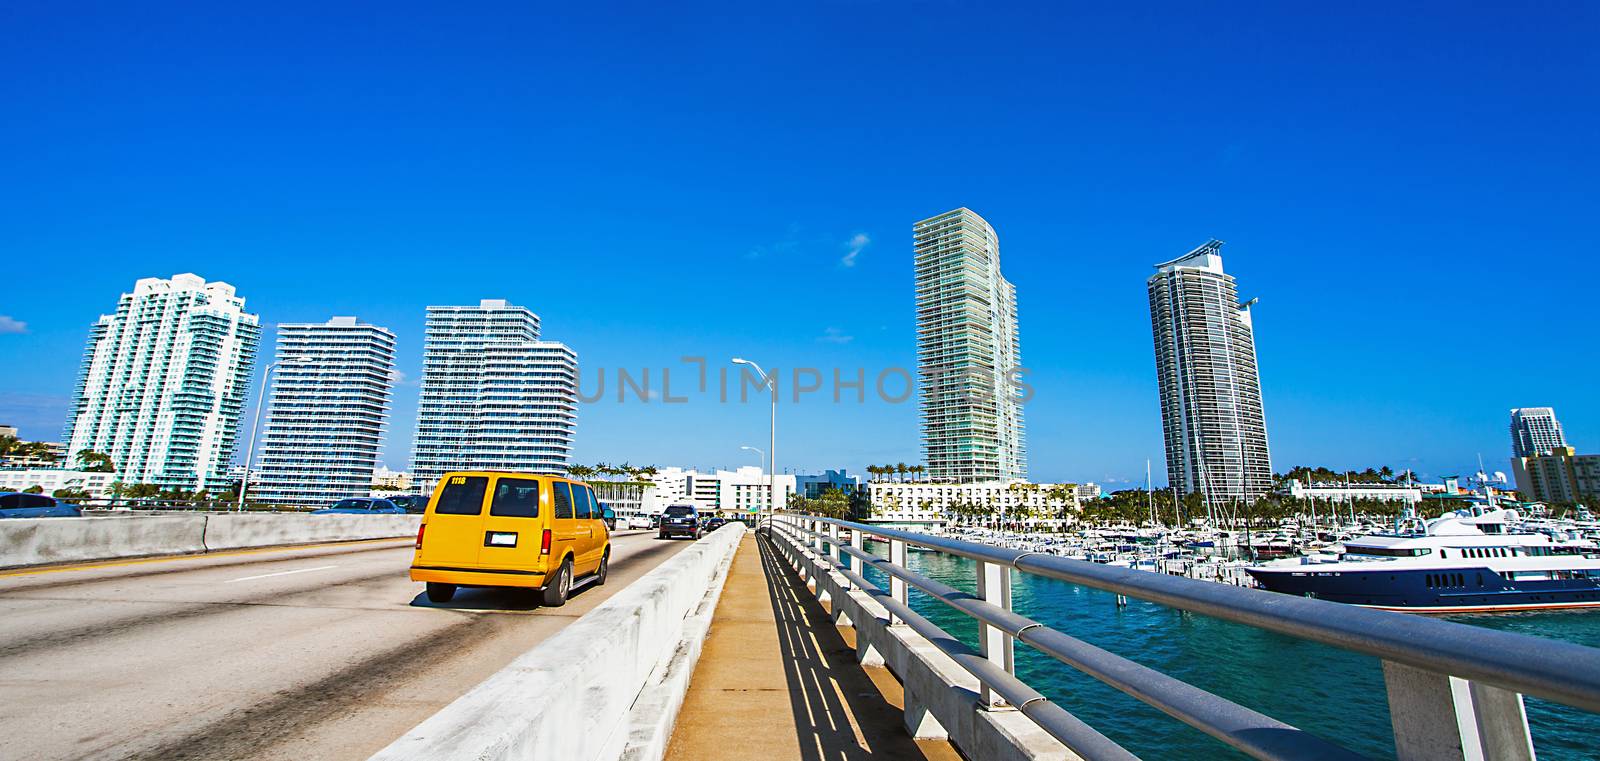 Taxi on a bridge in Miami Florida USA by Makeral